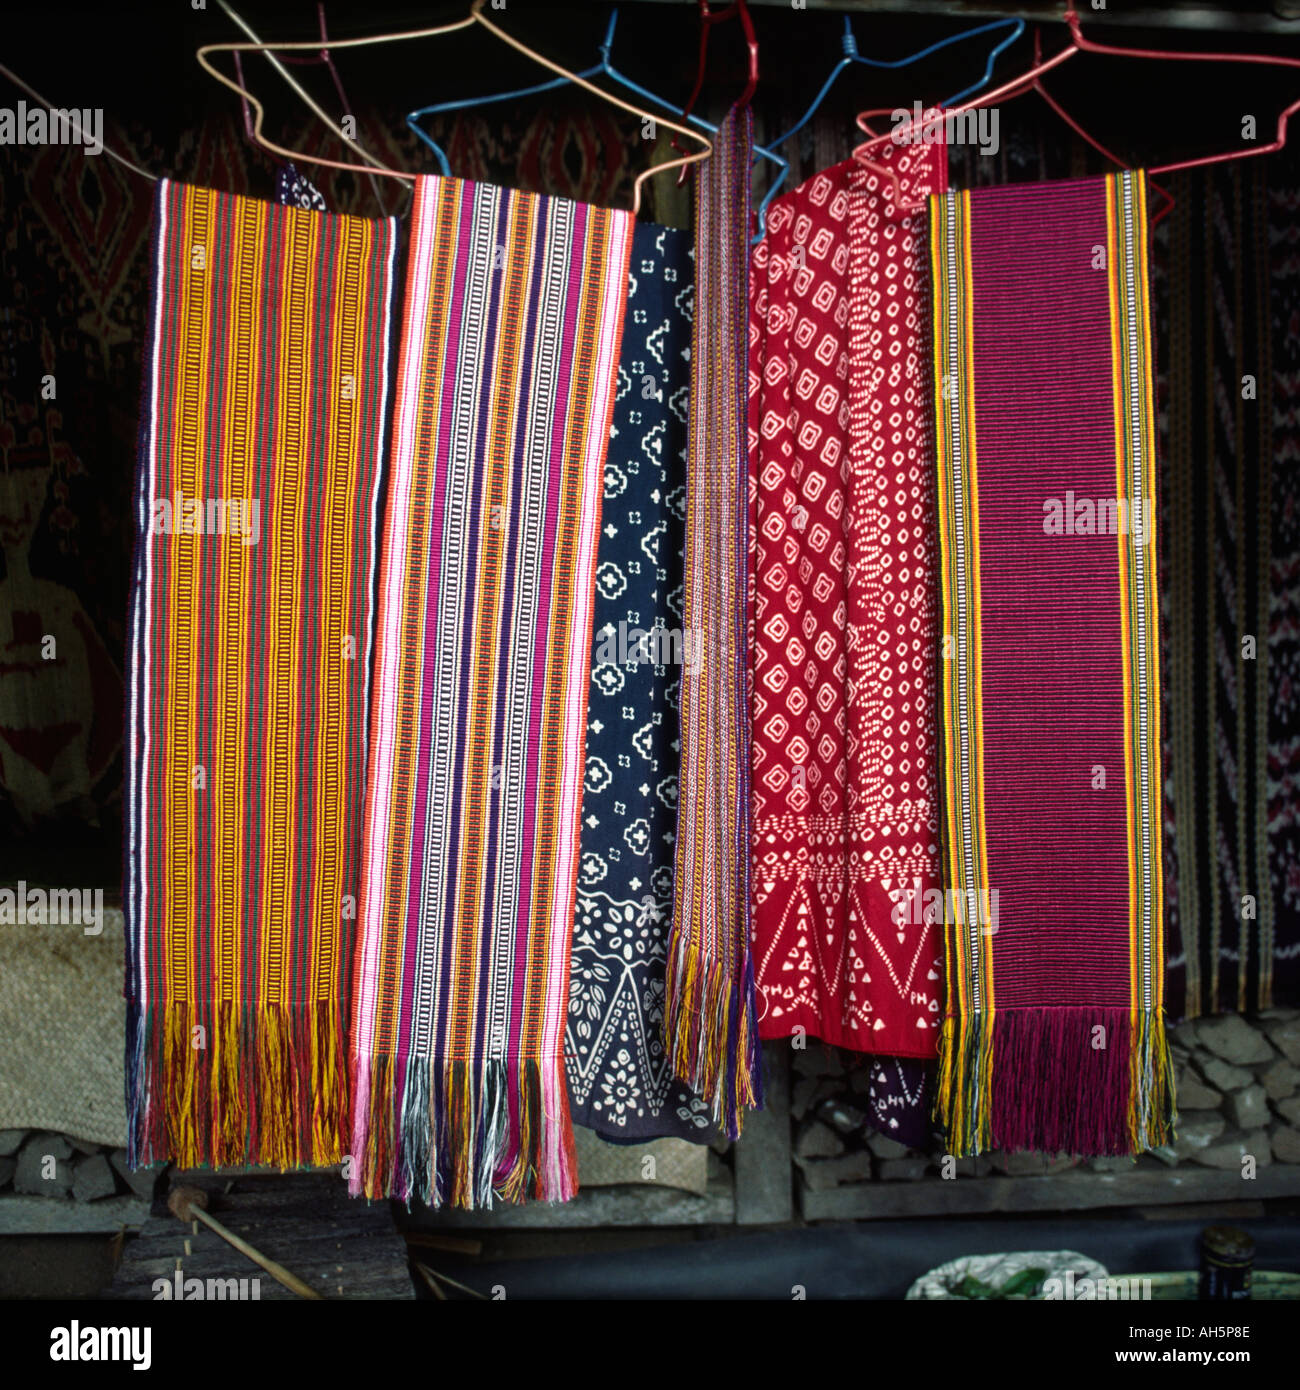 Indonesia Bali Tenganan Bali Aga village woven fabrics Stock Photo